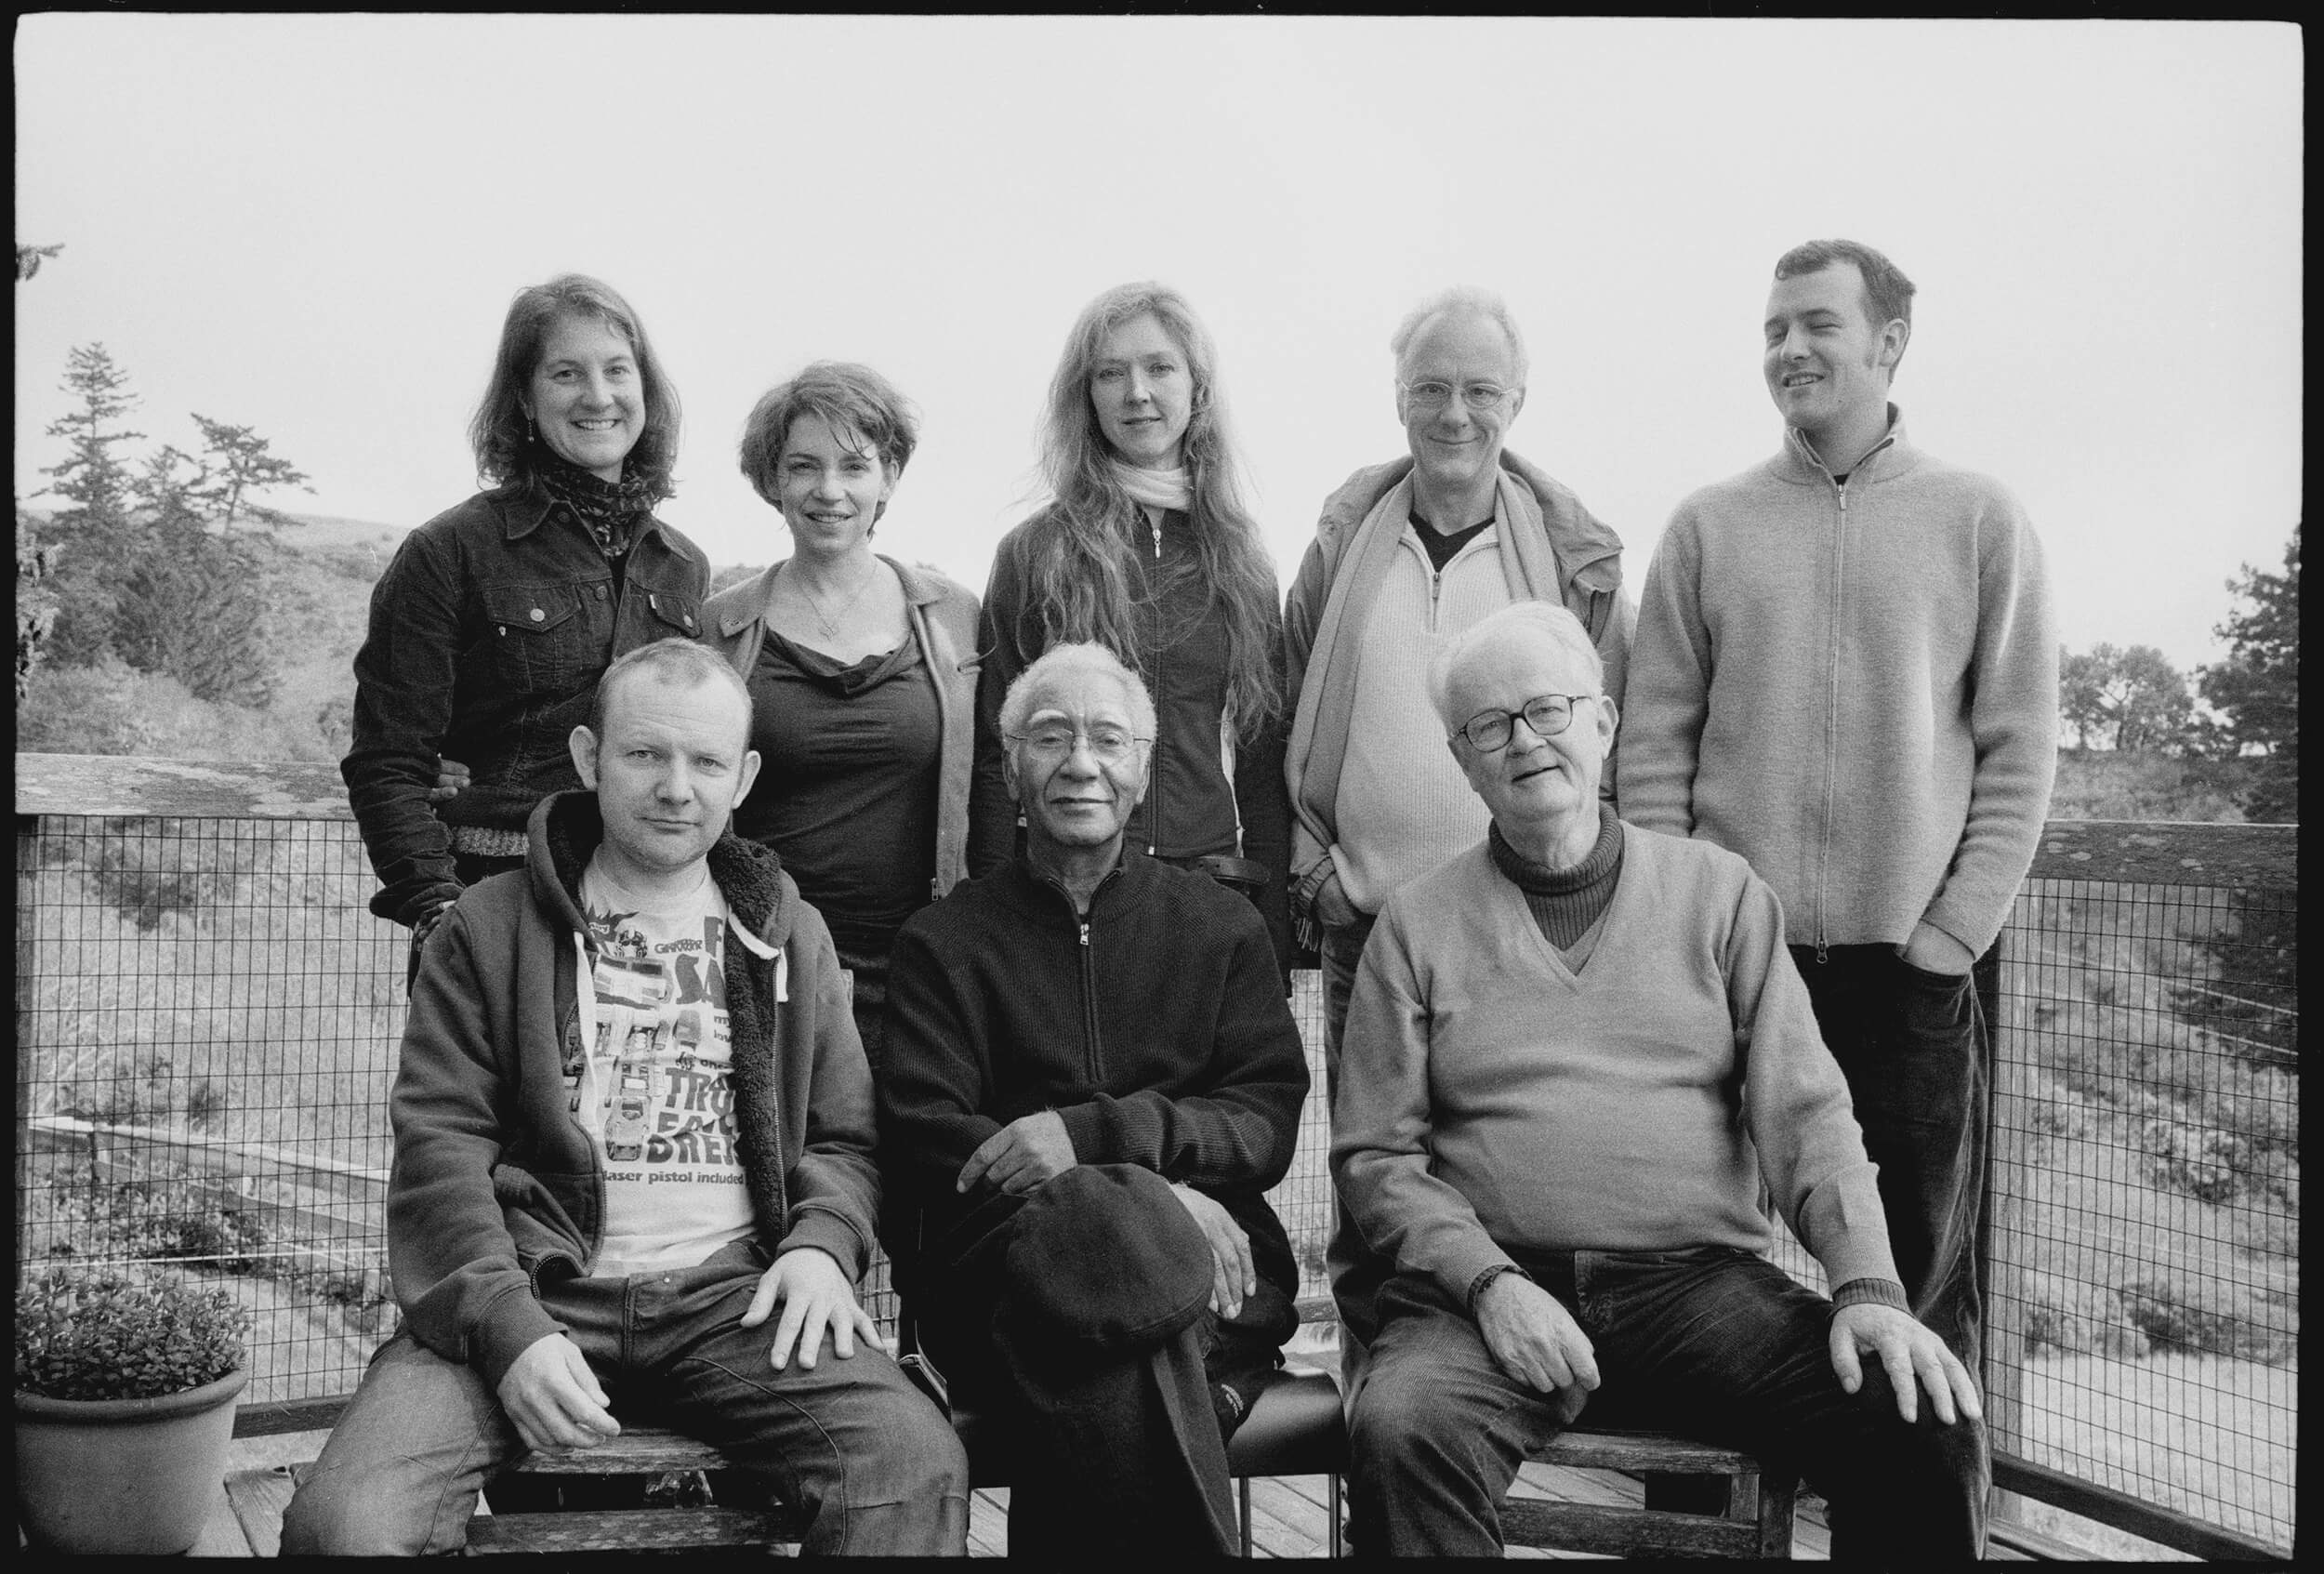 front (from left to right): Paweł Mykietyn, Kidd Jordan, Tom Johnson; back: Lisa Bielawa, Carla Kihlstedt, Natasha Barrett, Jürg Frey, Gyan Riley